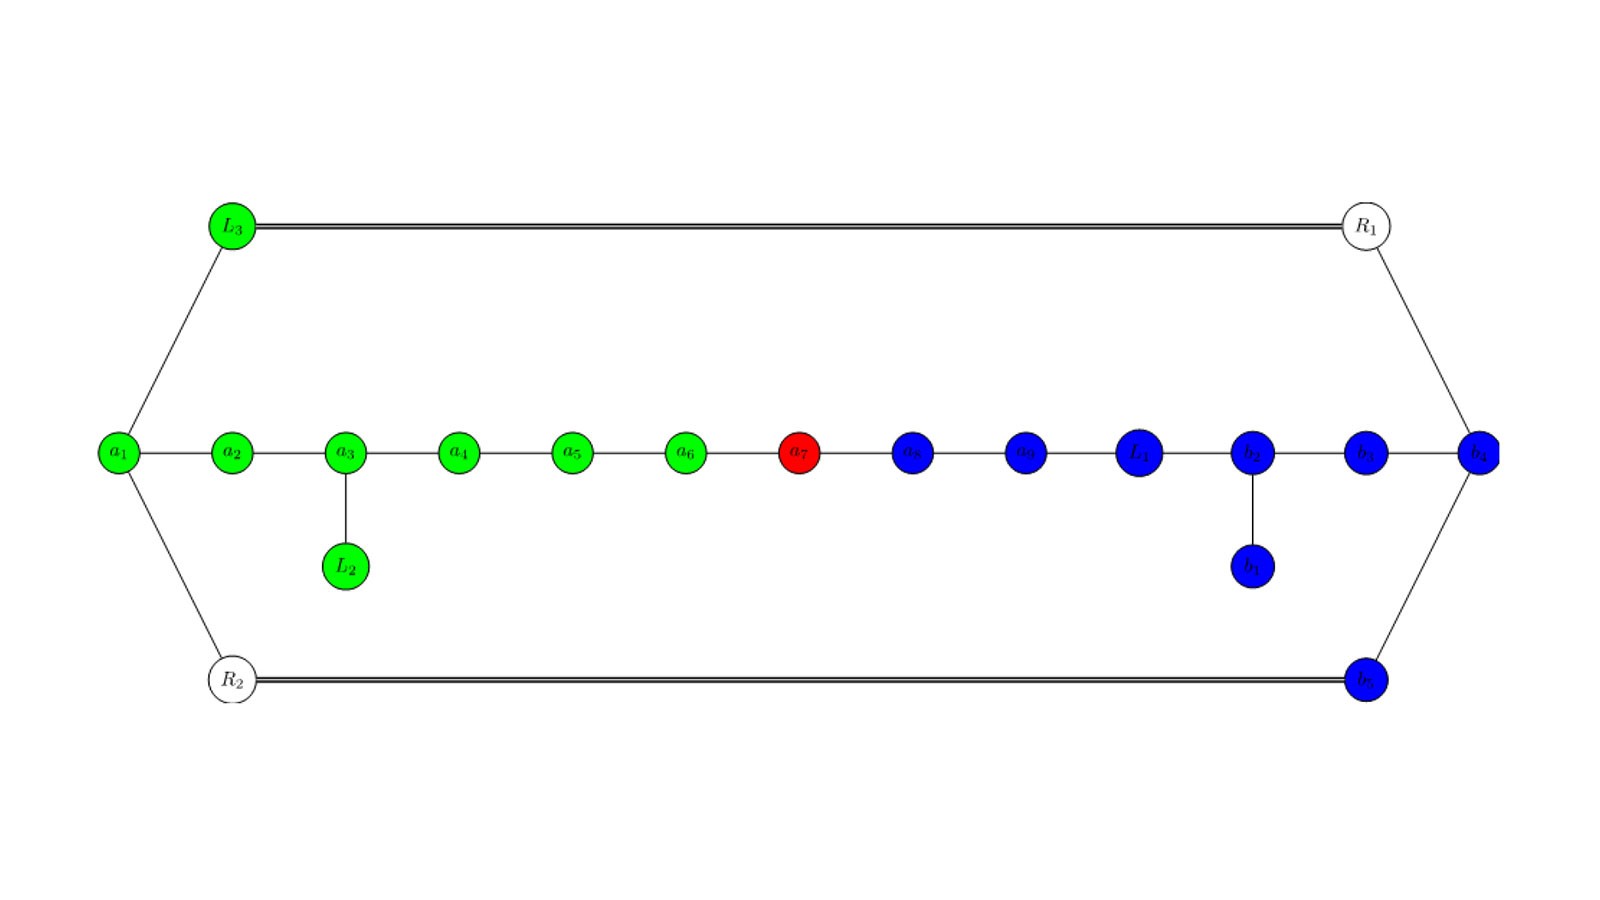 different Jacobian elliptic fibrations correspond to specific node colors.